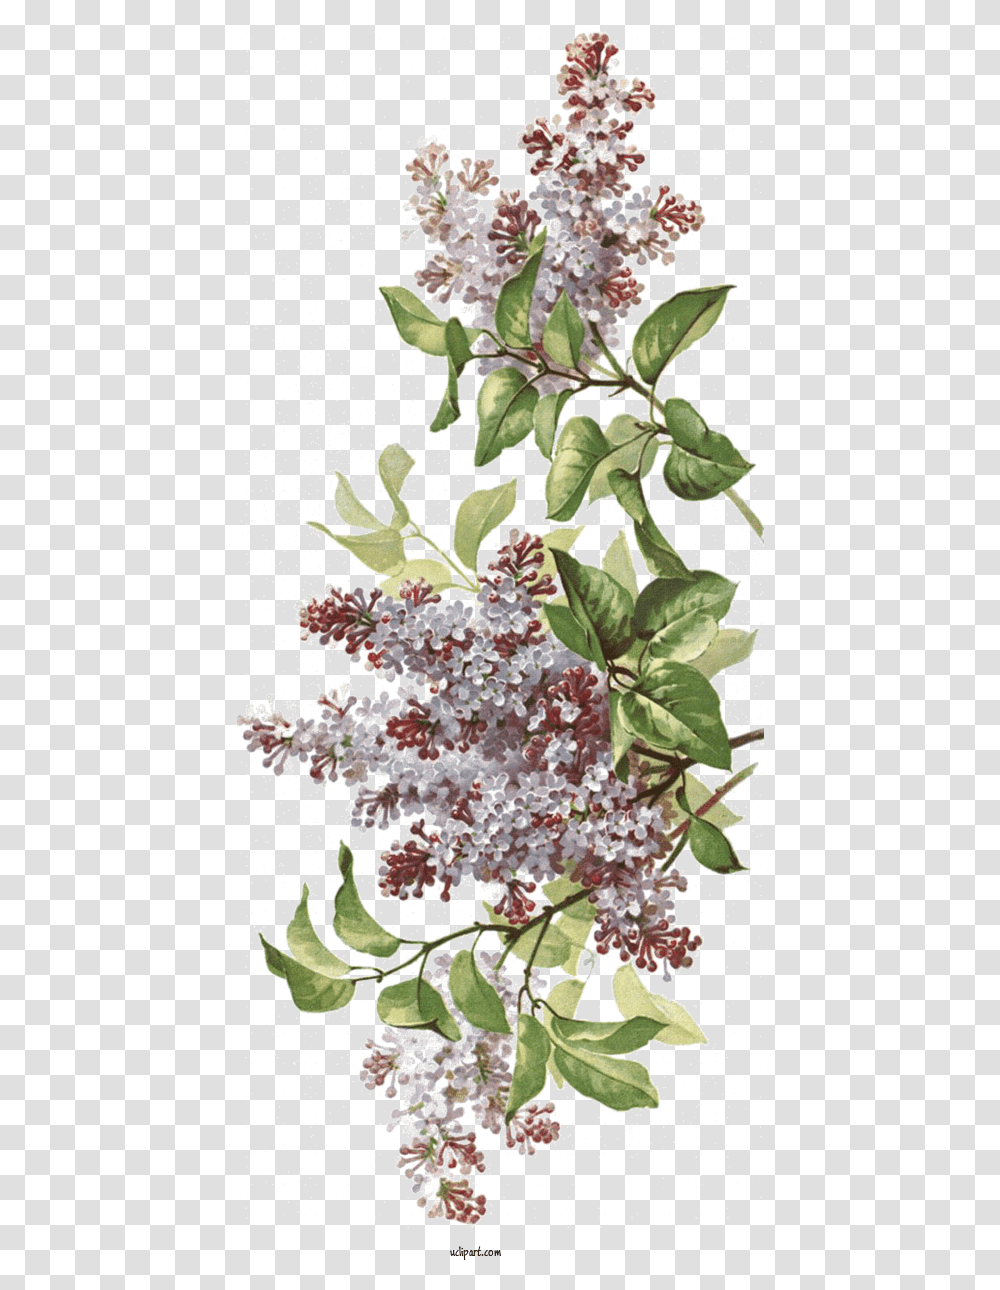 Flowers Blog Drawing Design For Flower Clipart Flower Butterfly Bush, Plant, Blossom, Lilac, Leaf Transparent Png